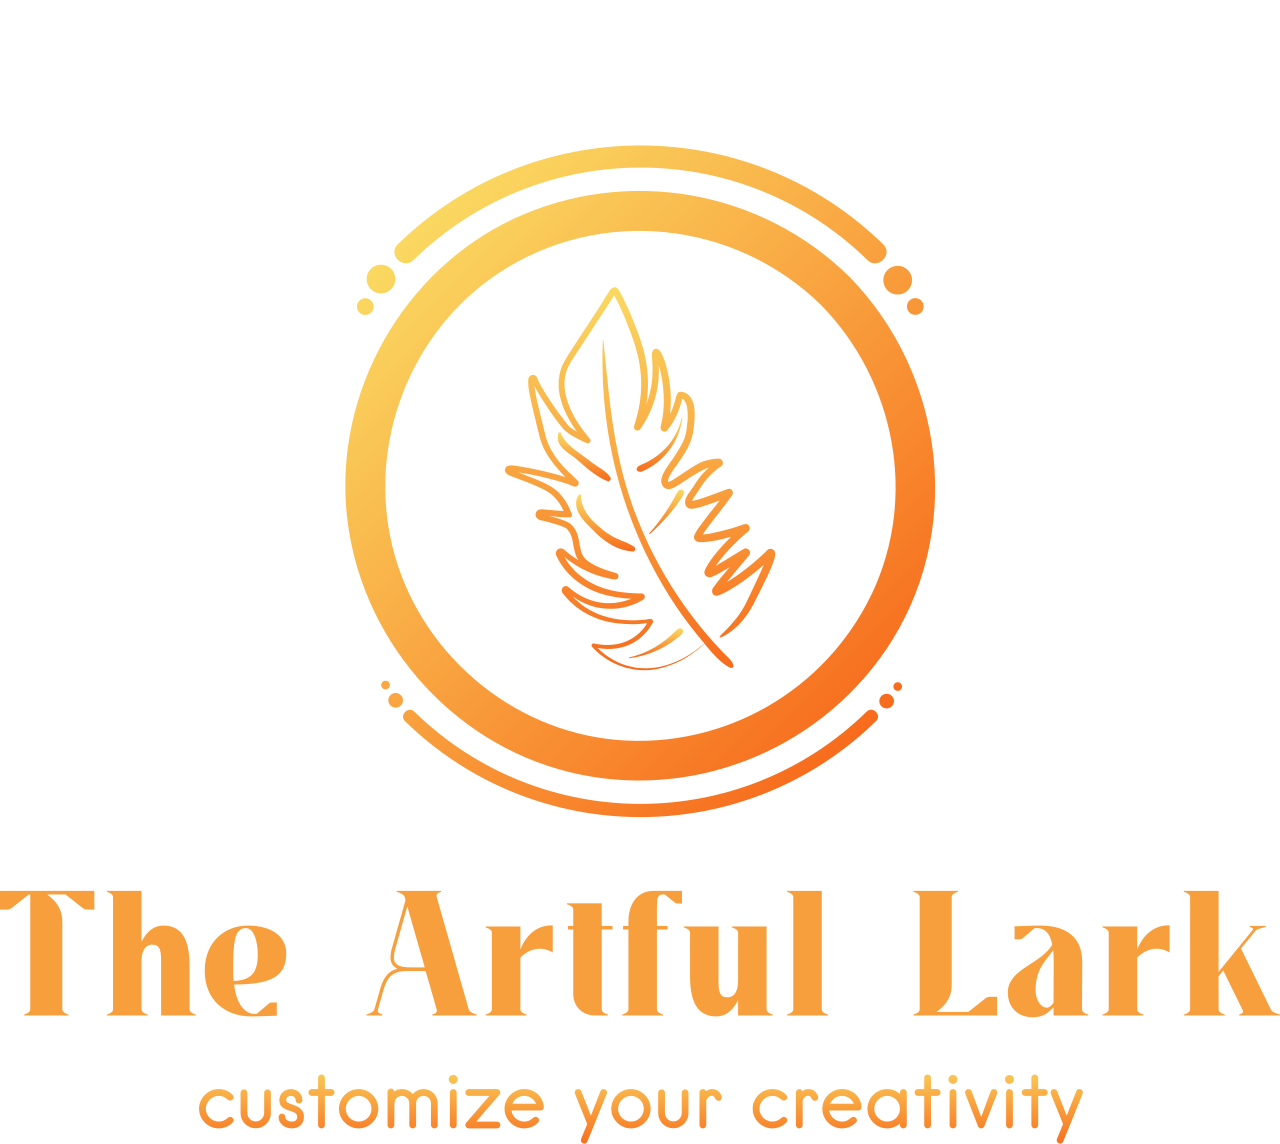 The Artful Lark's web page